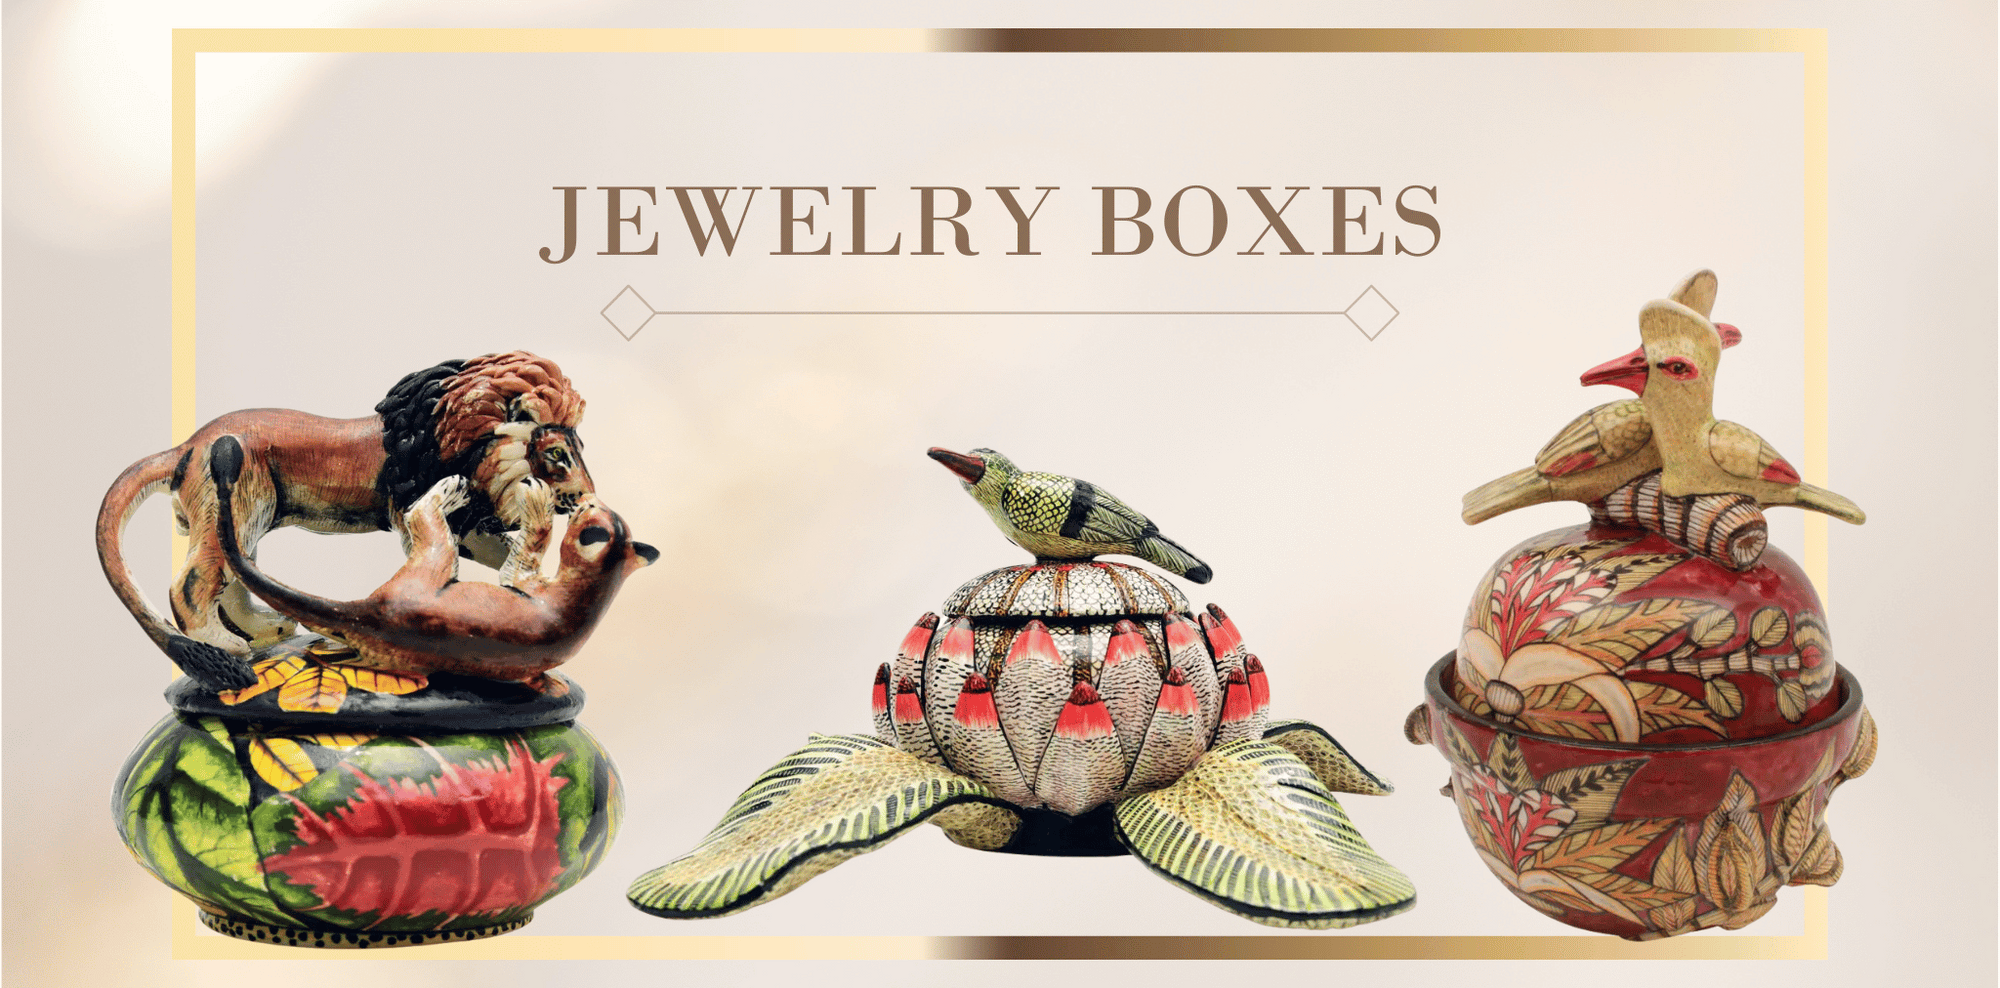 Luxury Jewelry Boxes: A Unique Gift Idea